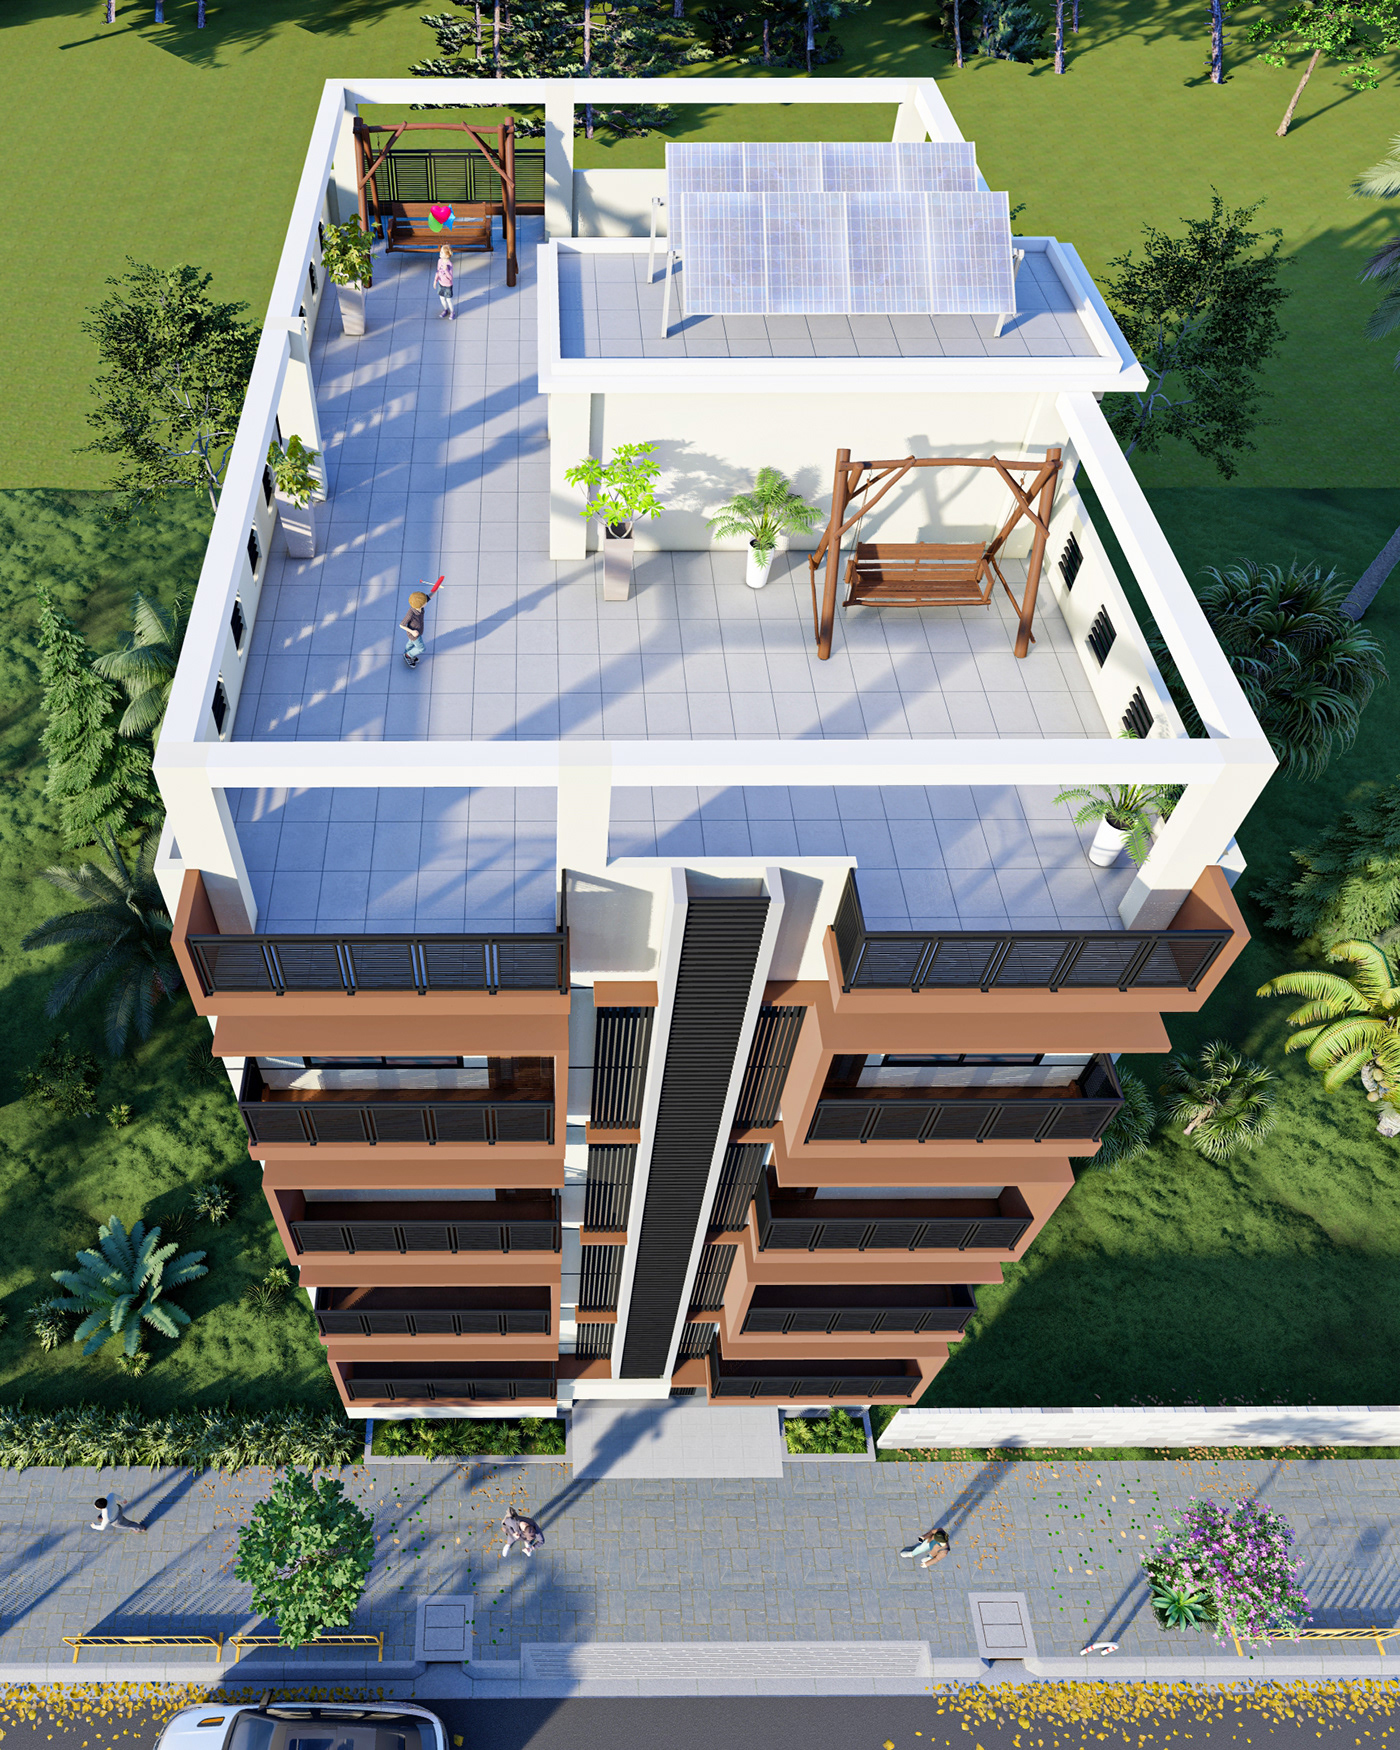 3D 5 storied building apartment building architectural architecture home plan HOUSE DESIGN Render view visualization